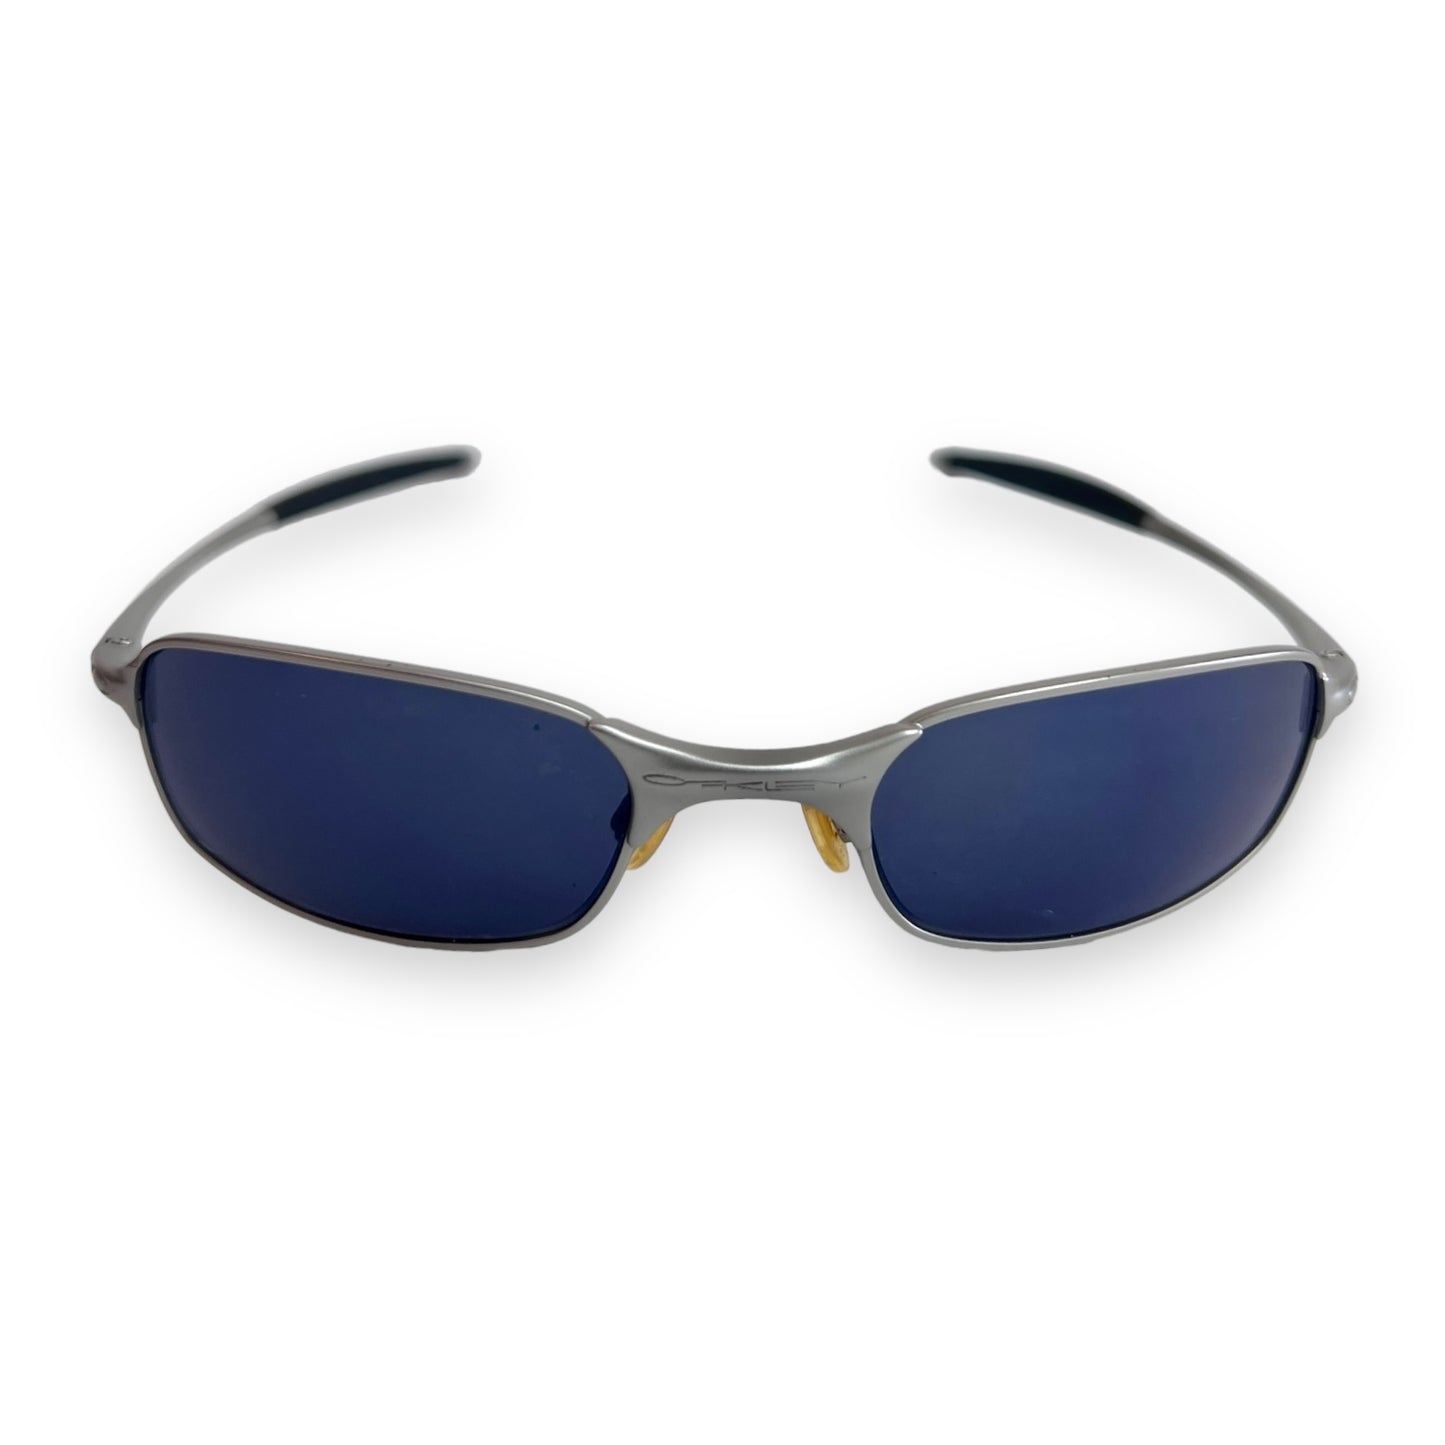 Oakley square wire 2.0 silver frame blue iridium lens sunglasses